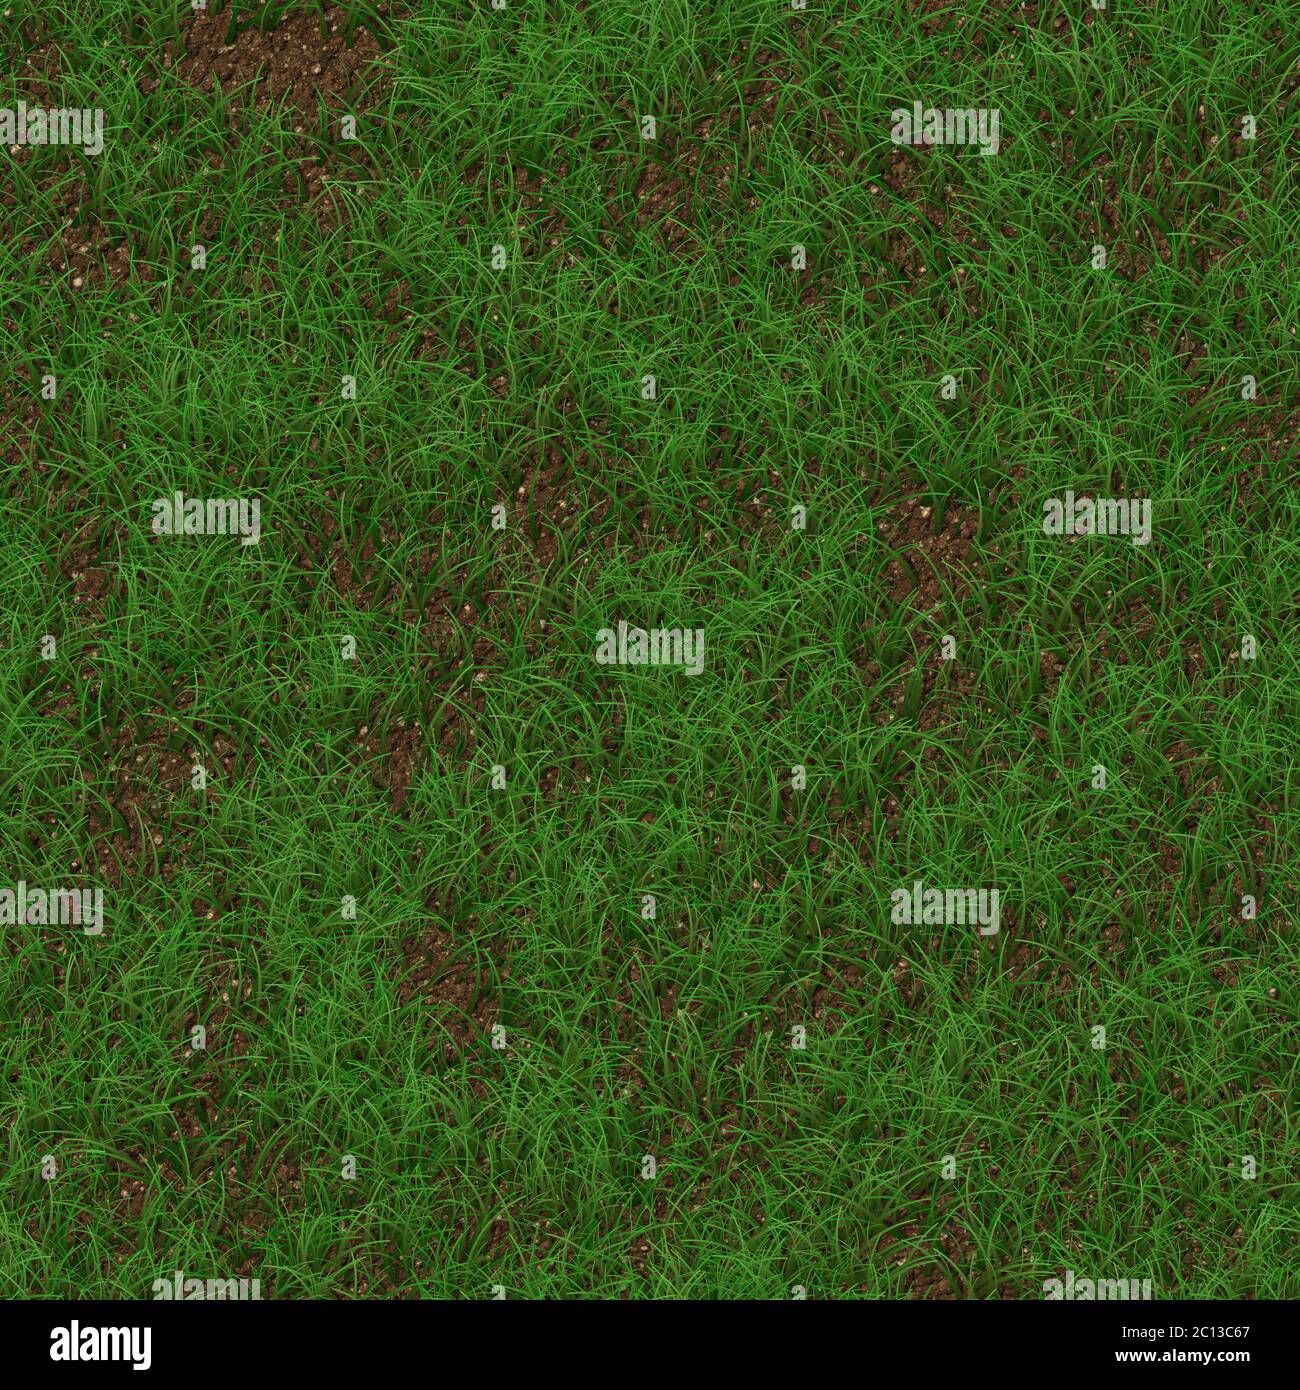 Green grass seamless texture background Stock Photo